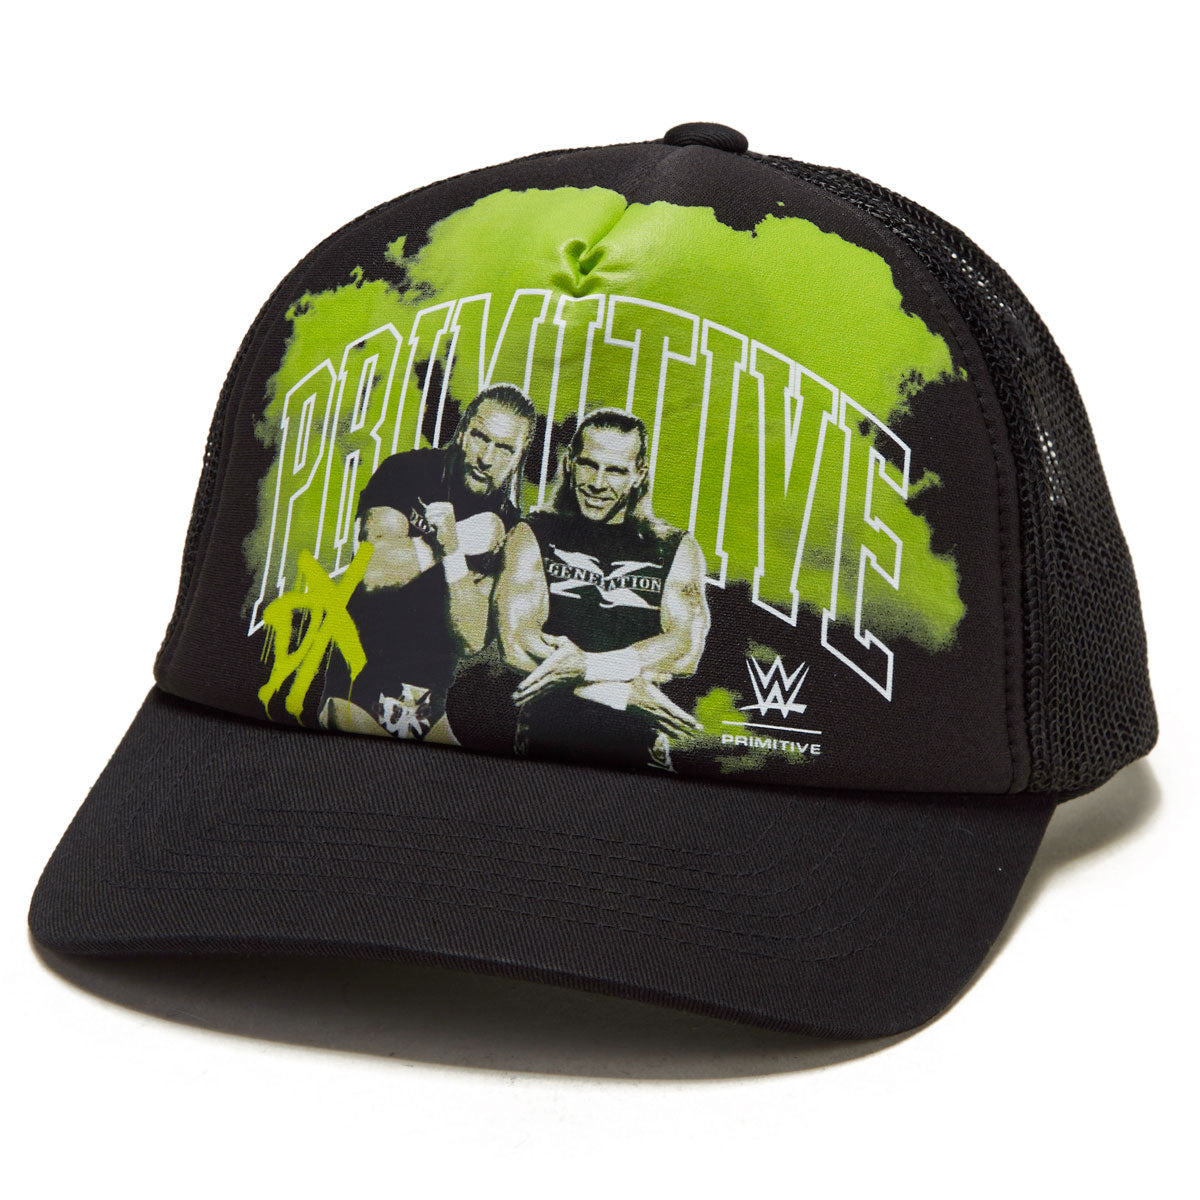 Primitive x WWE DX Trucker Hat - Black image 1